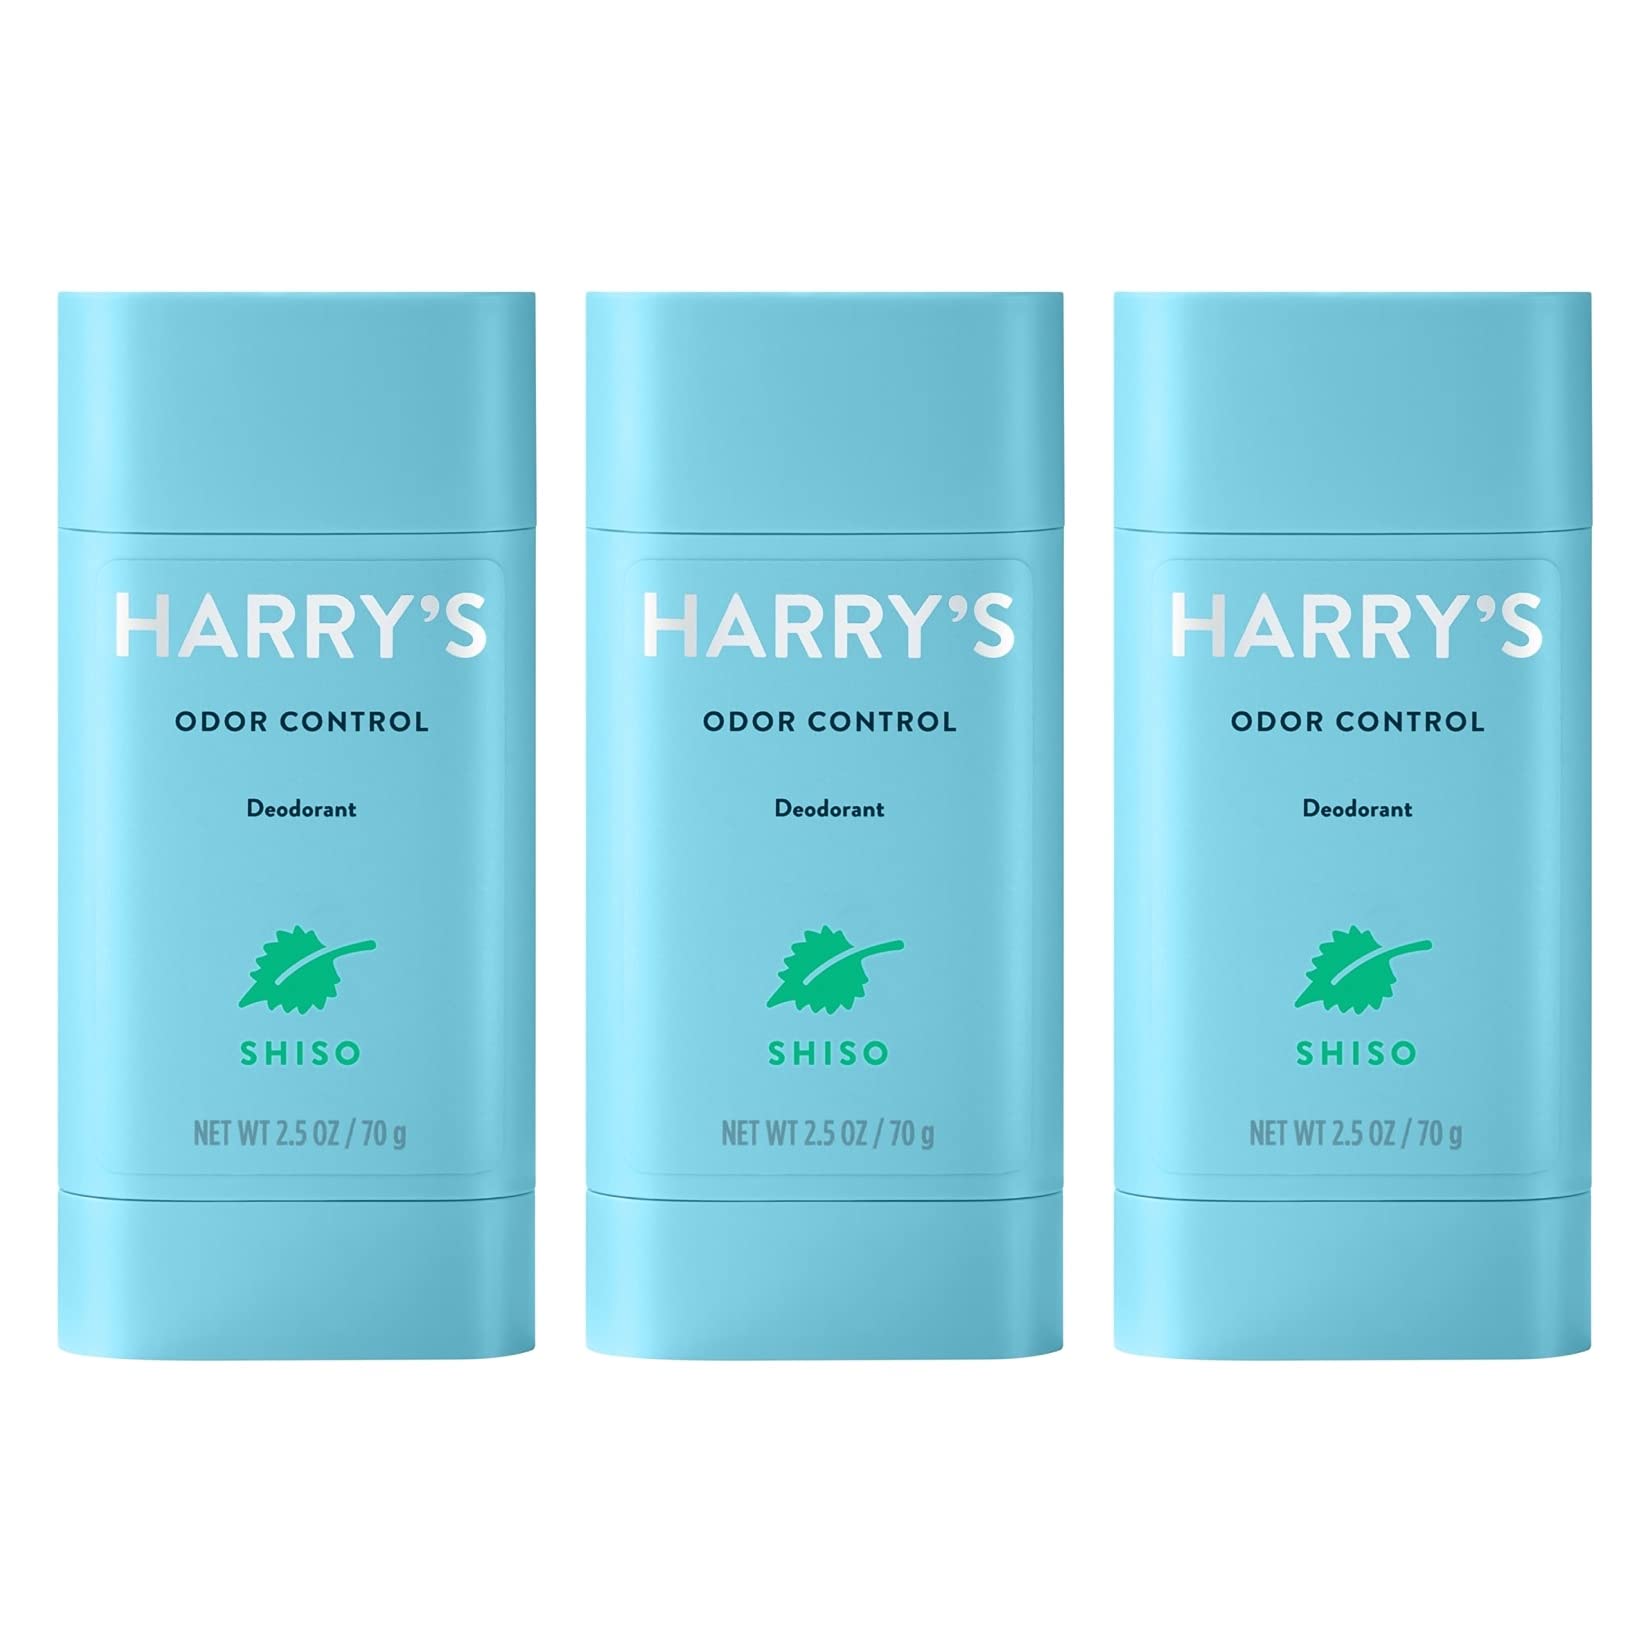 Harry's Harrys Mens Deodorant - Odor Control Deodorant - Aluminum-Free - Shiso (3 Count)